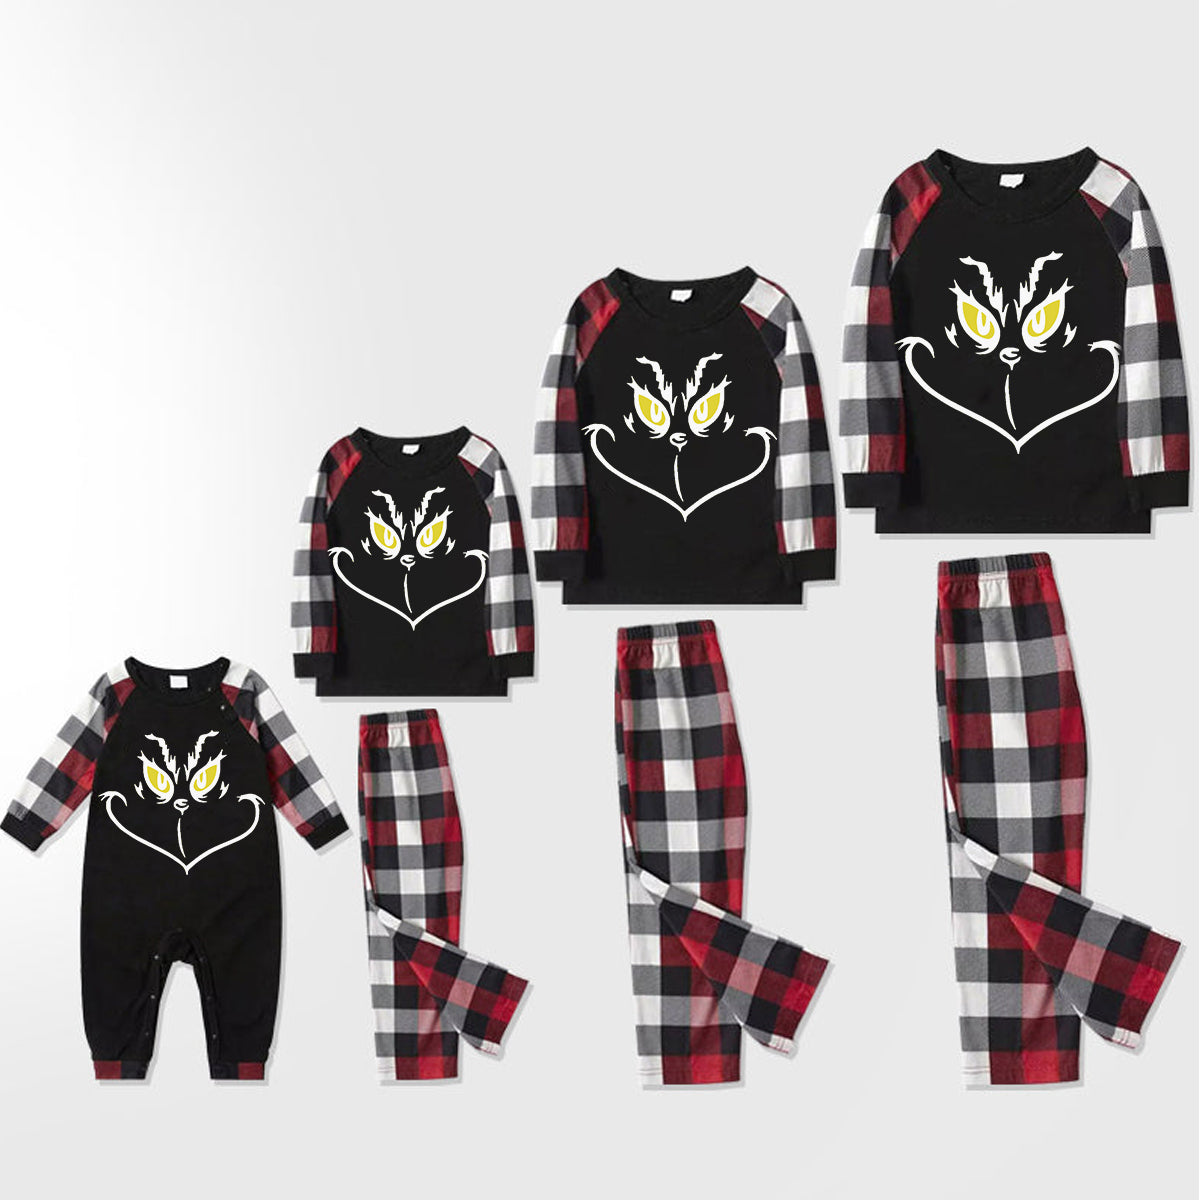 Christmas Cartoon Face Print Contrast Tops and Red & Black & White Plaid Pants Family Matching Pajamas Set With Dog Bandana